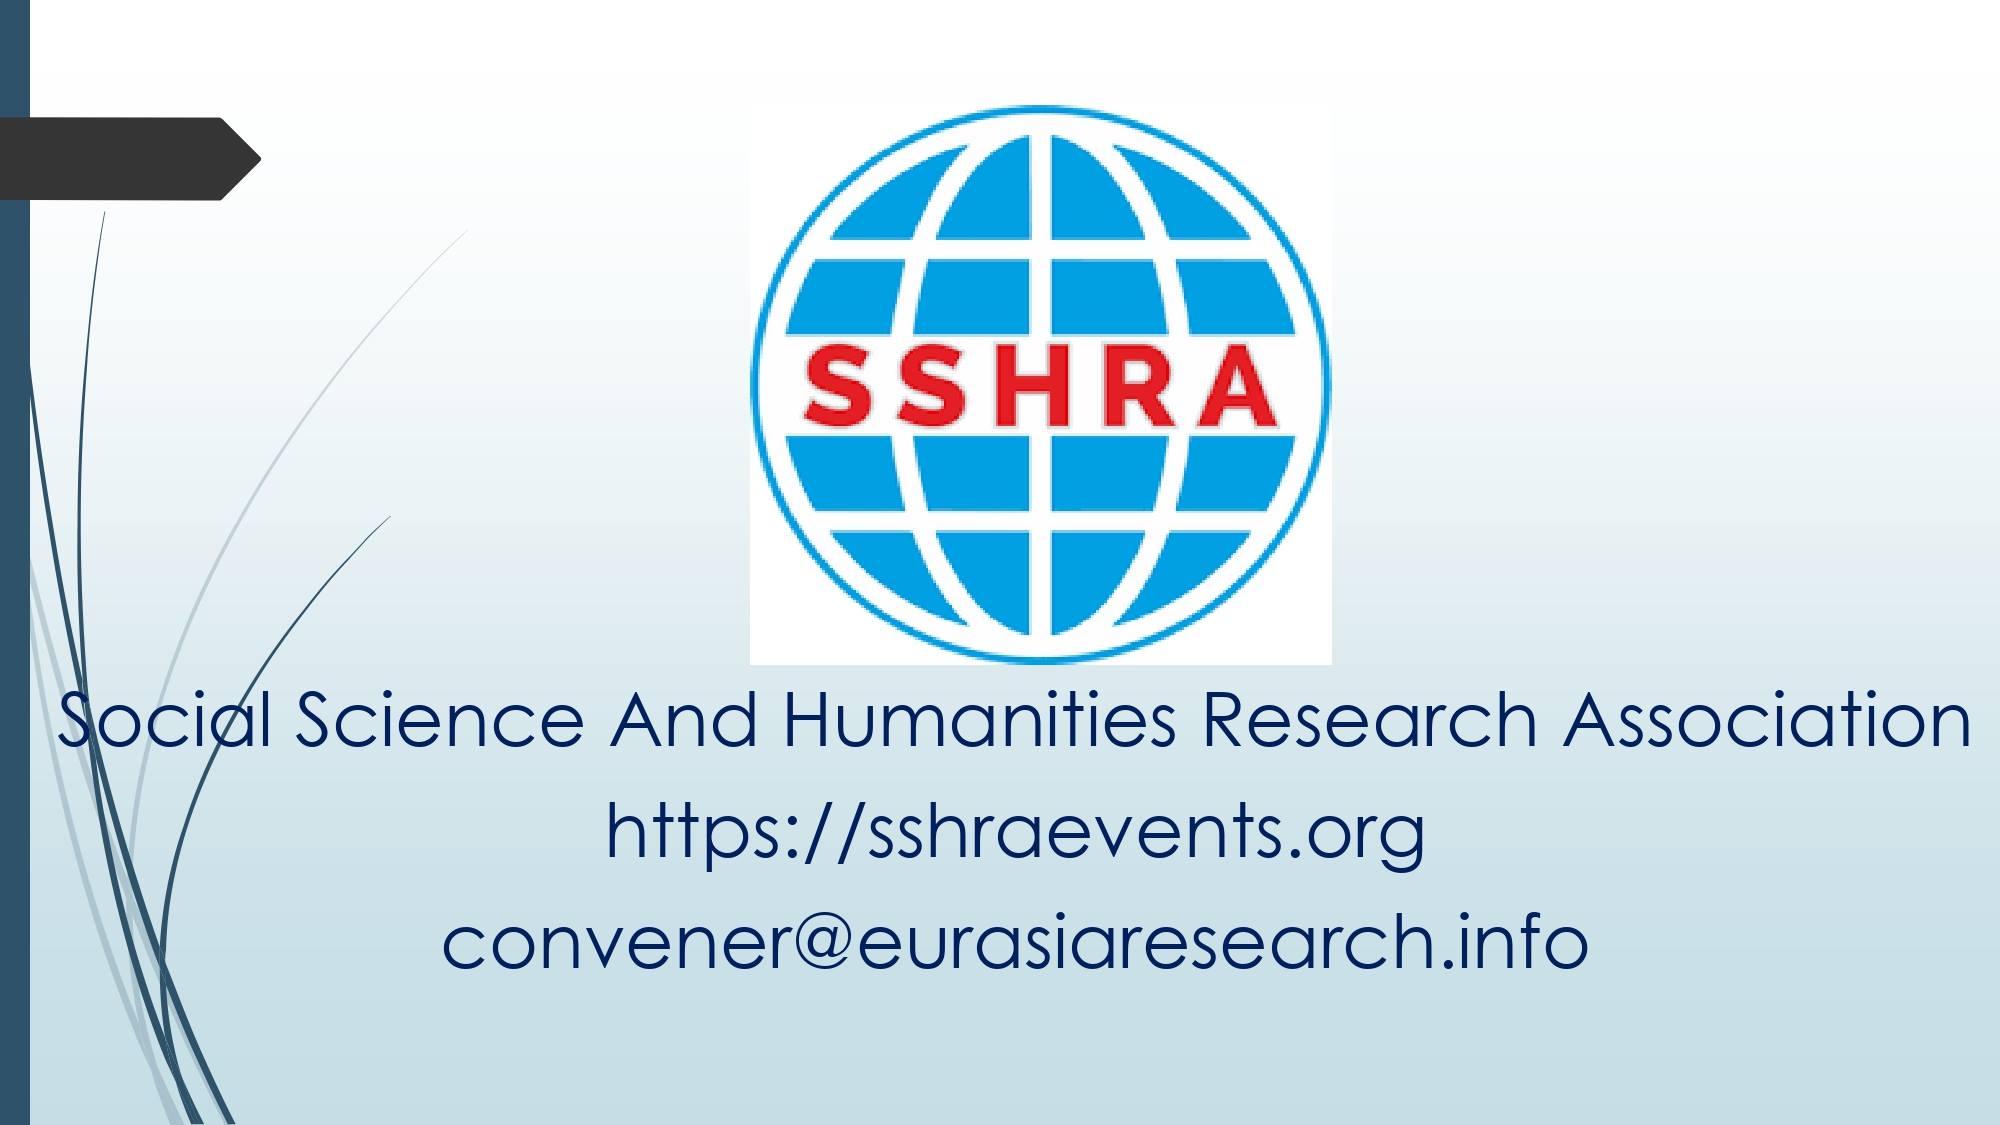 SSHRA 2023 – Social Science & Humanities Research Association International Conference, 12-13 September, London